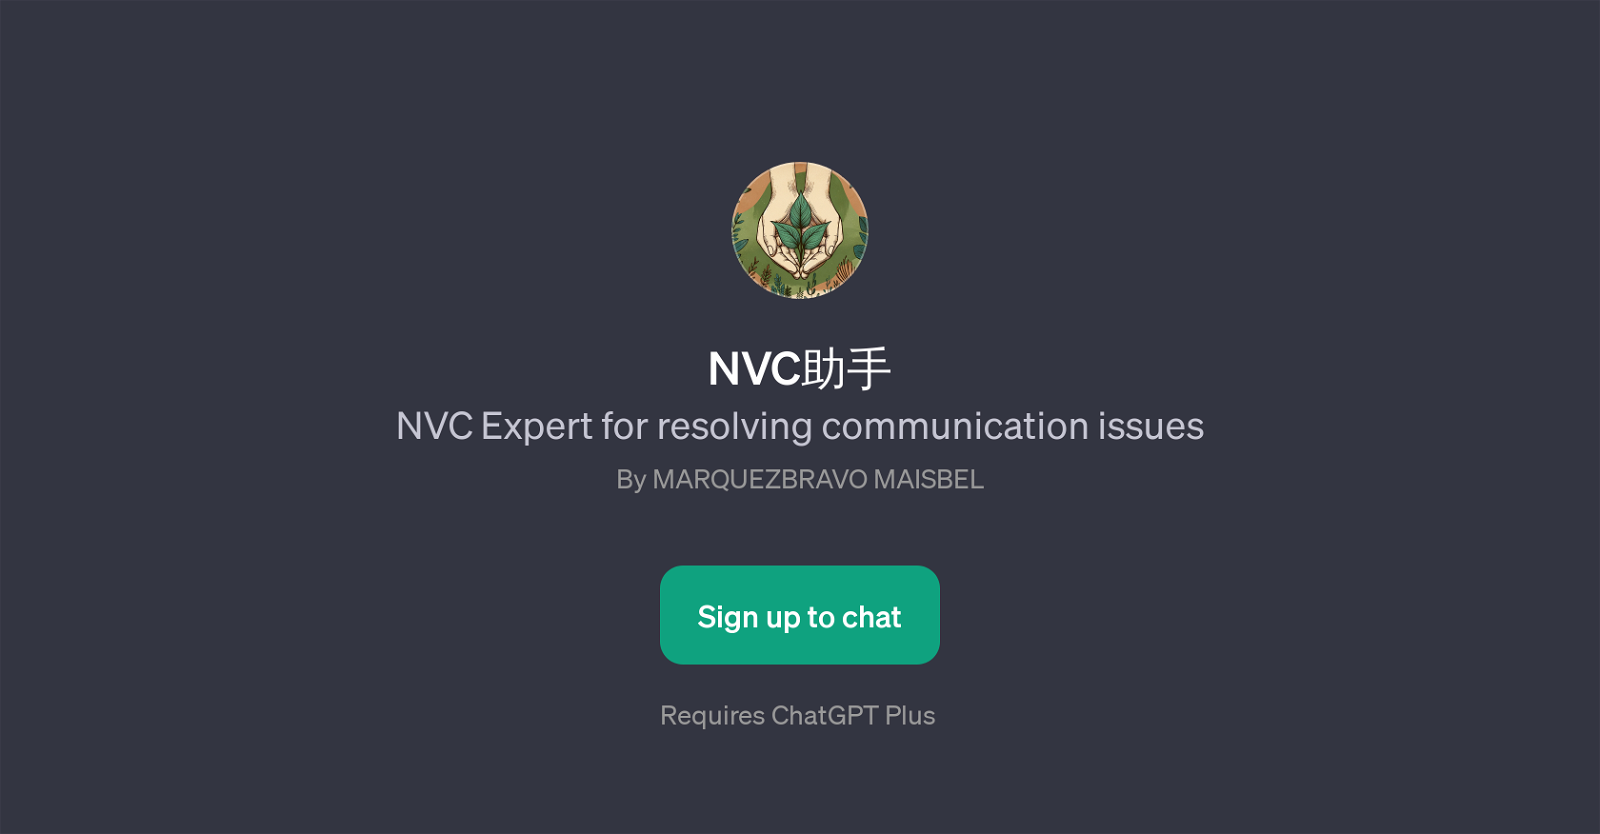 NVC website